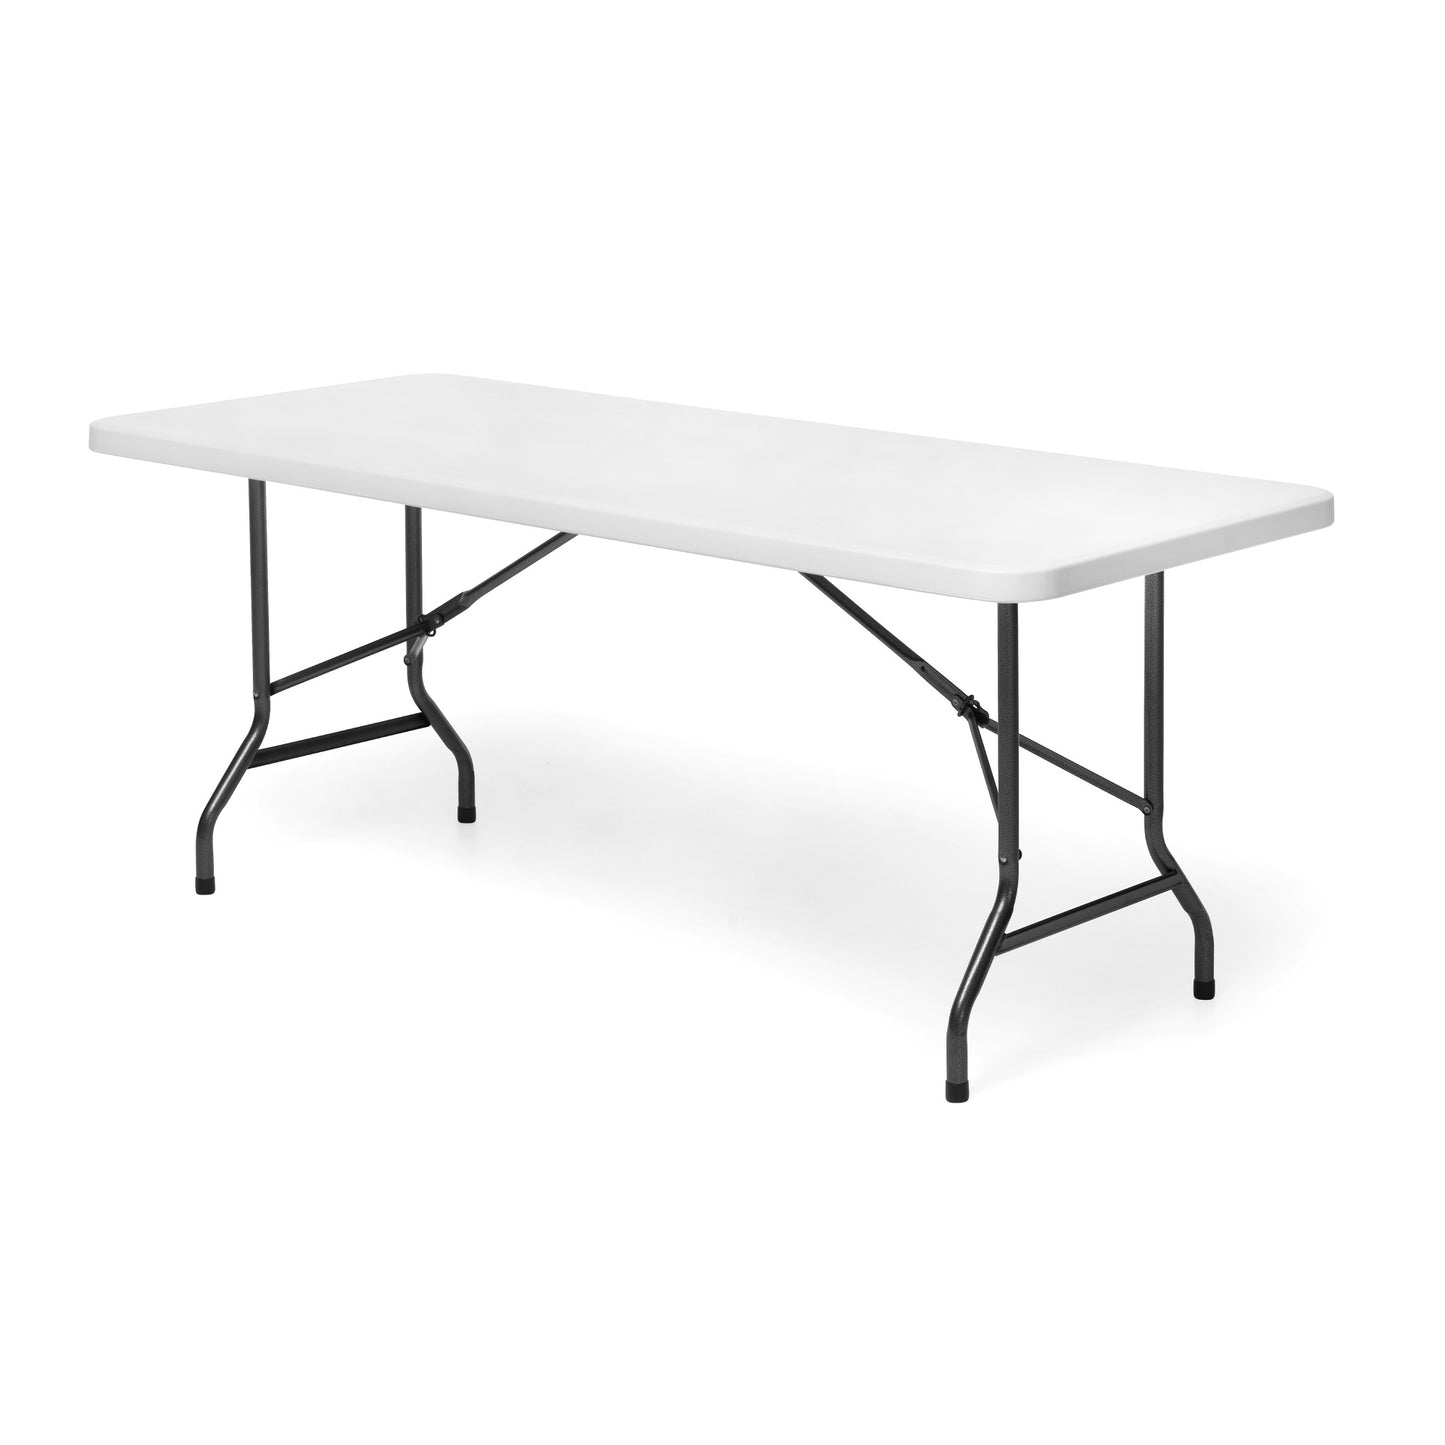 Kalasbordet - Hopfällbart bord